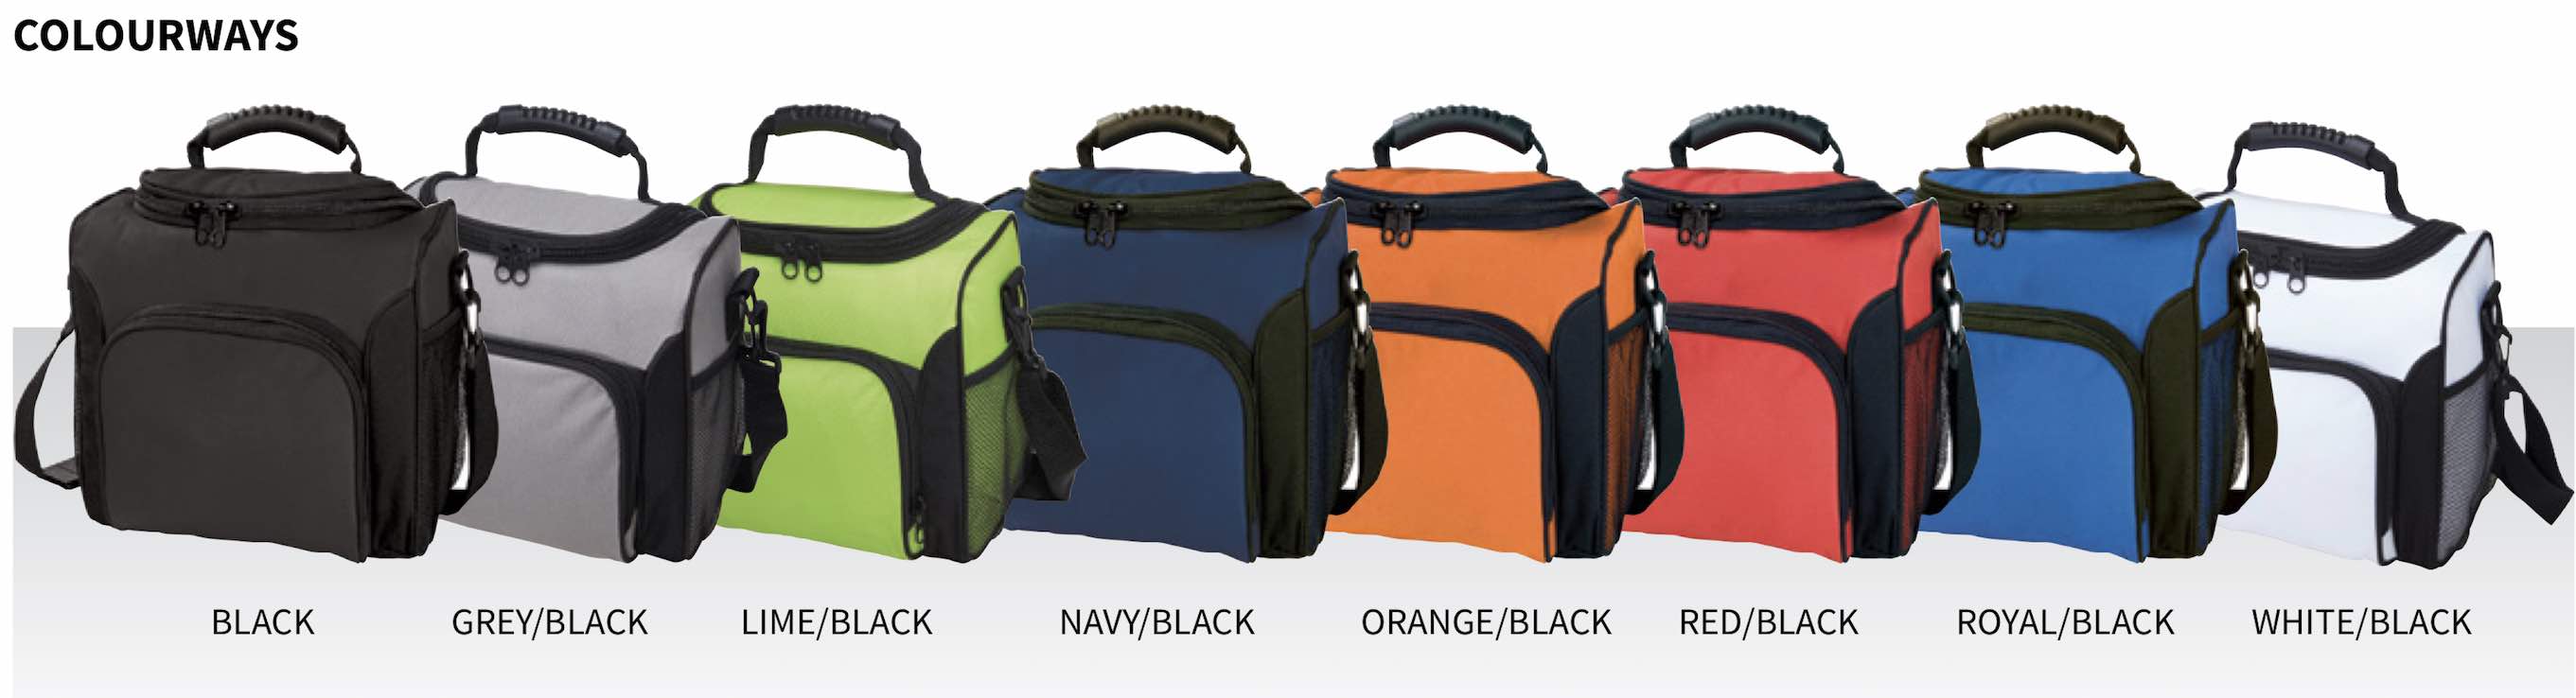 1164 Ultimate Cooler Bag Colourways